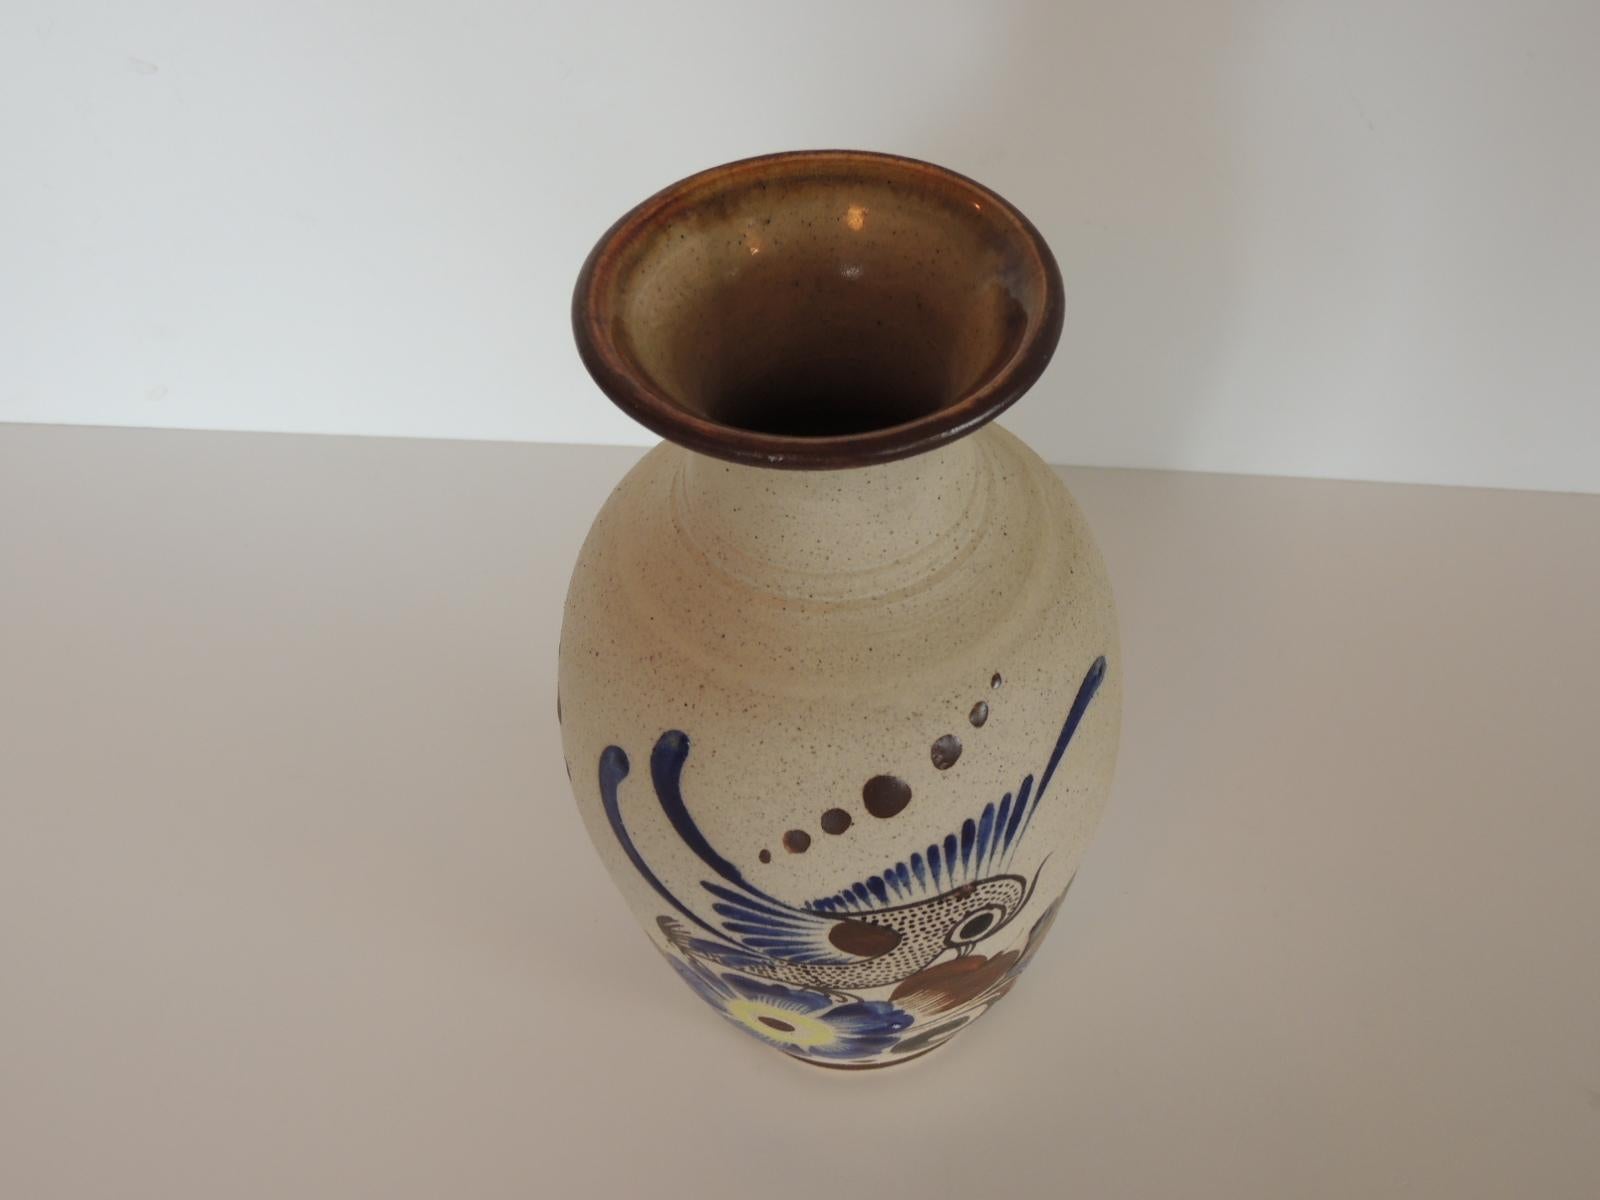 Vintage Mexican Talavera hand painted ceramic vase.
Round vase depicting bird and flowers. Signed Puerto Vallarta 1990
Size: 5